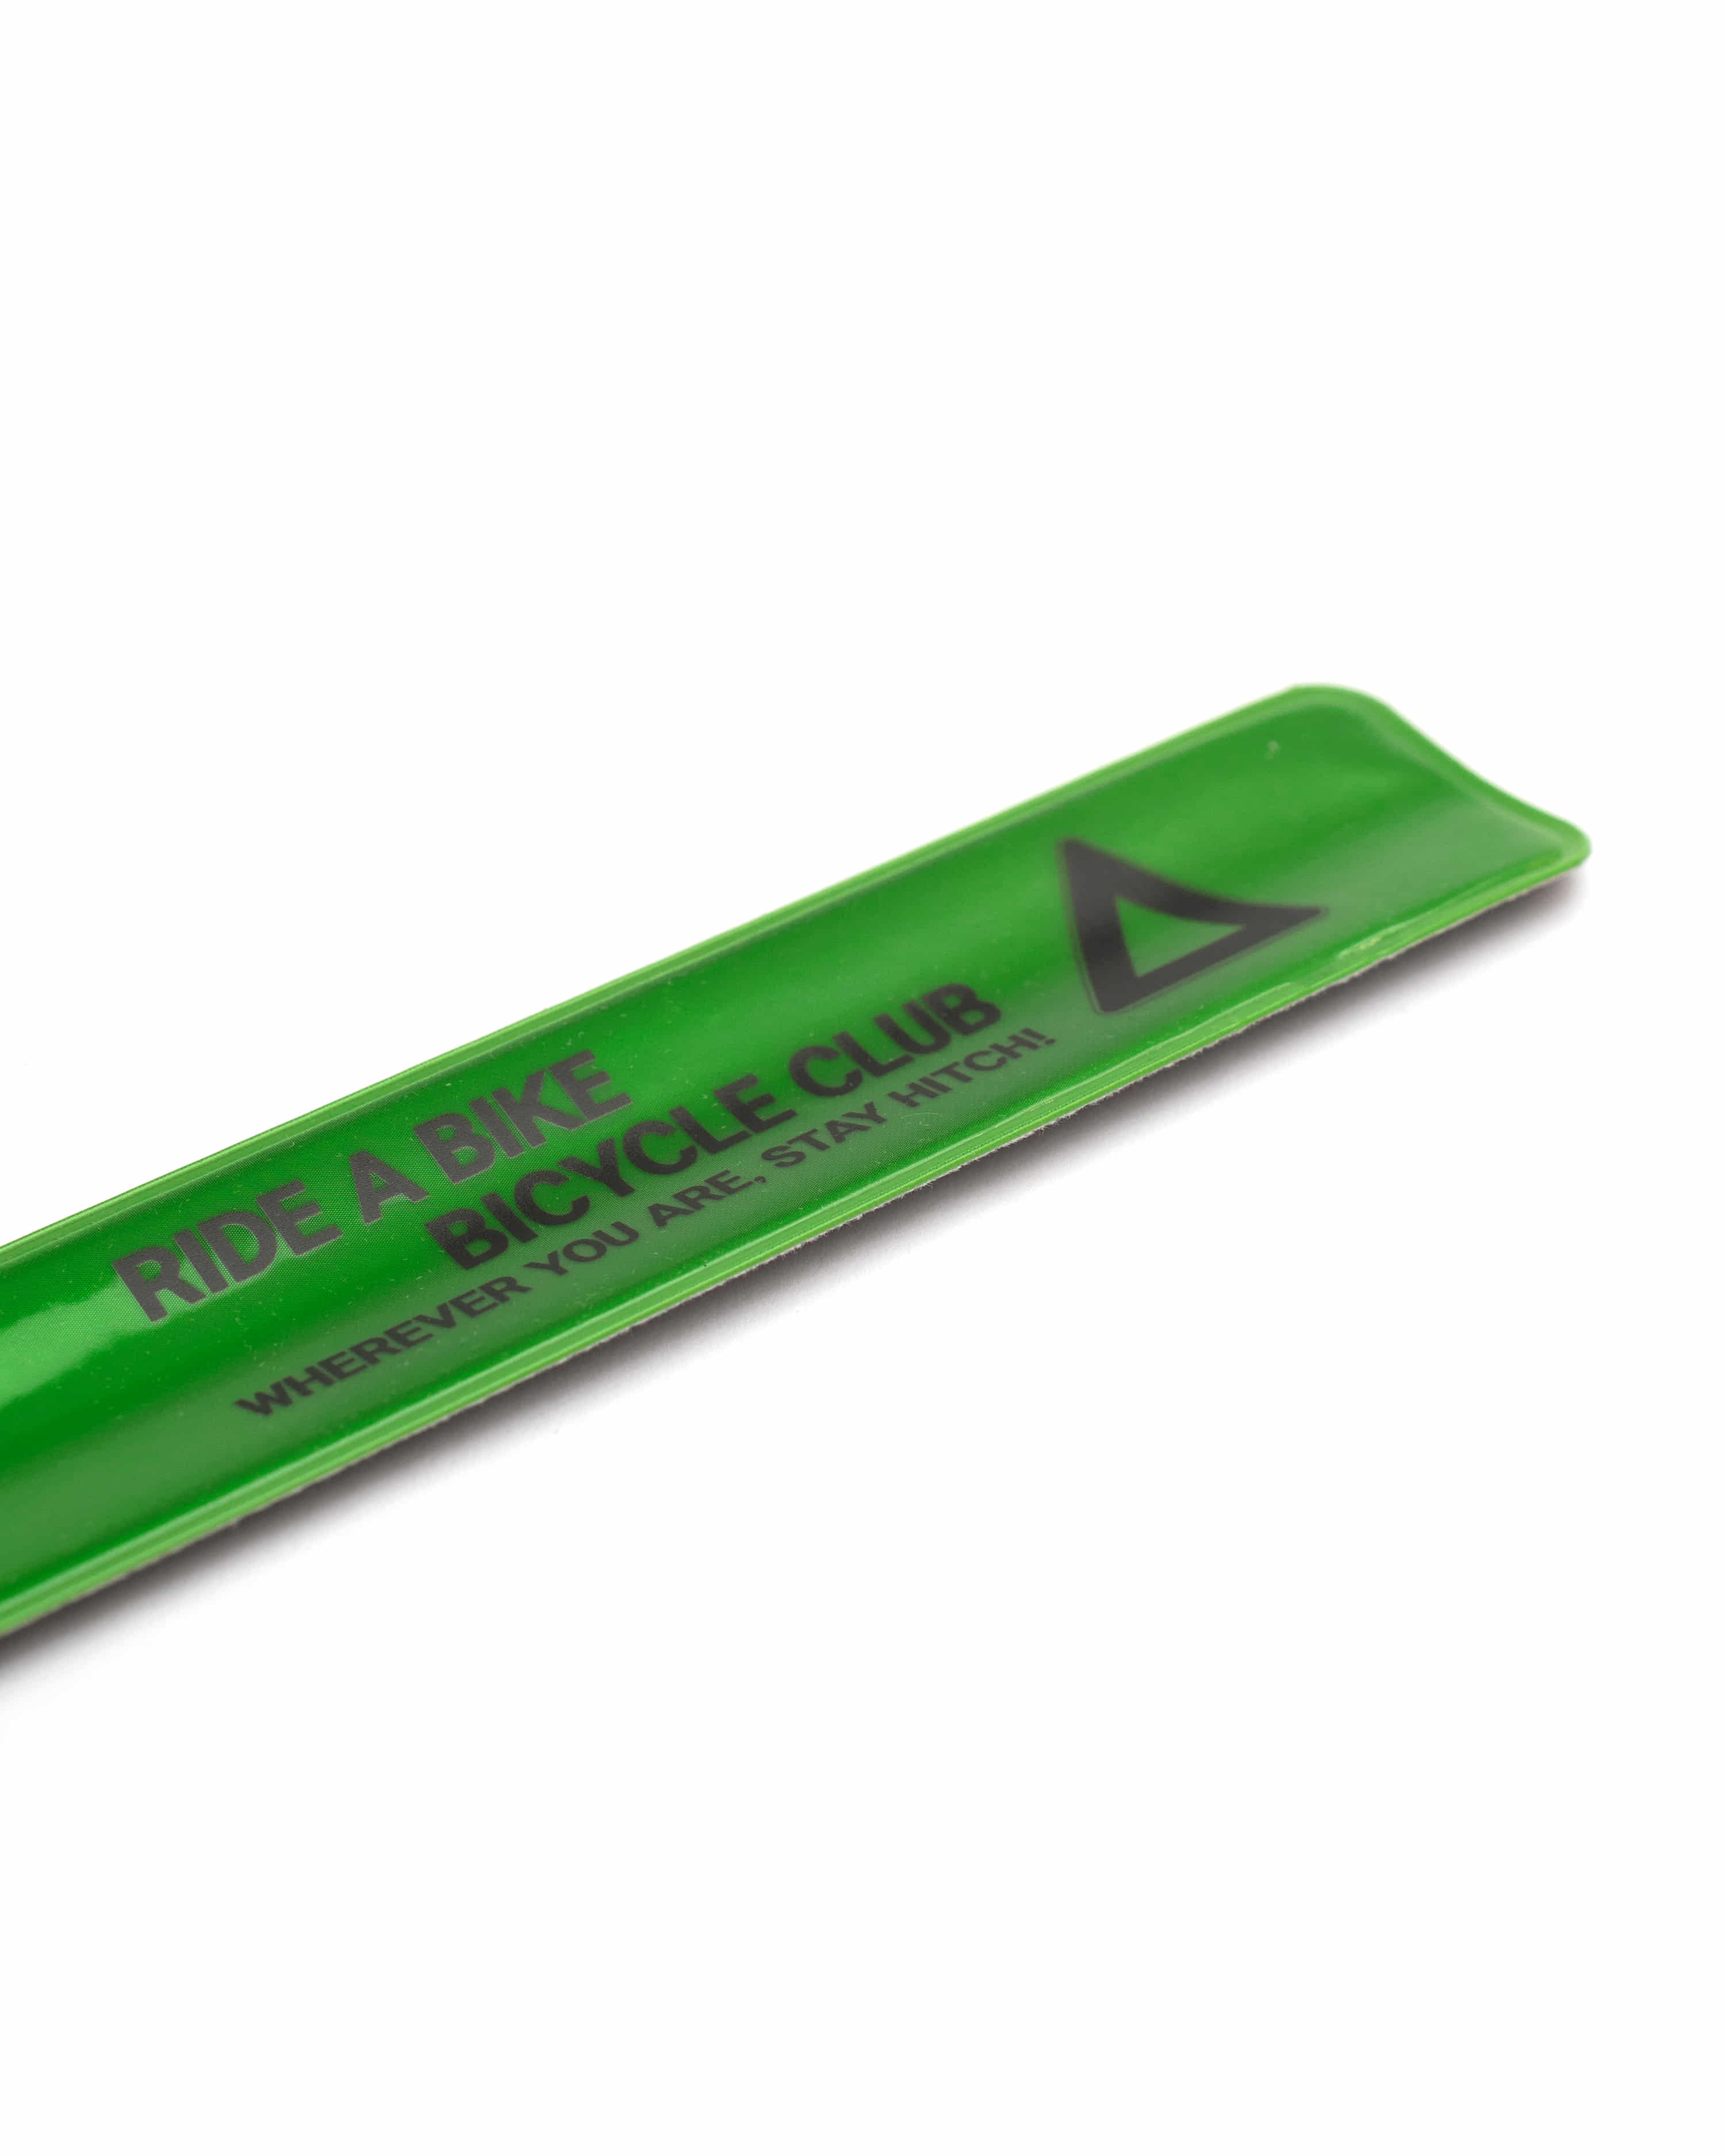 Reflector slapband (Long) - green